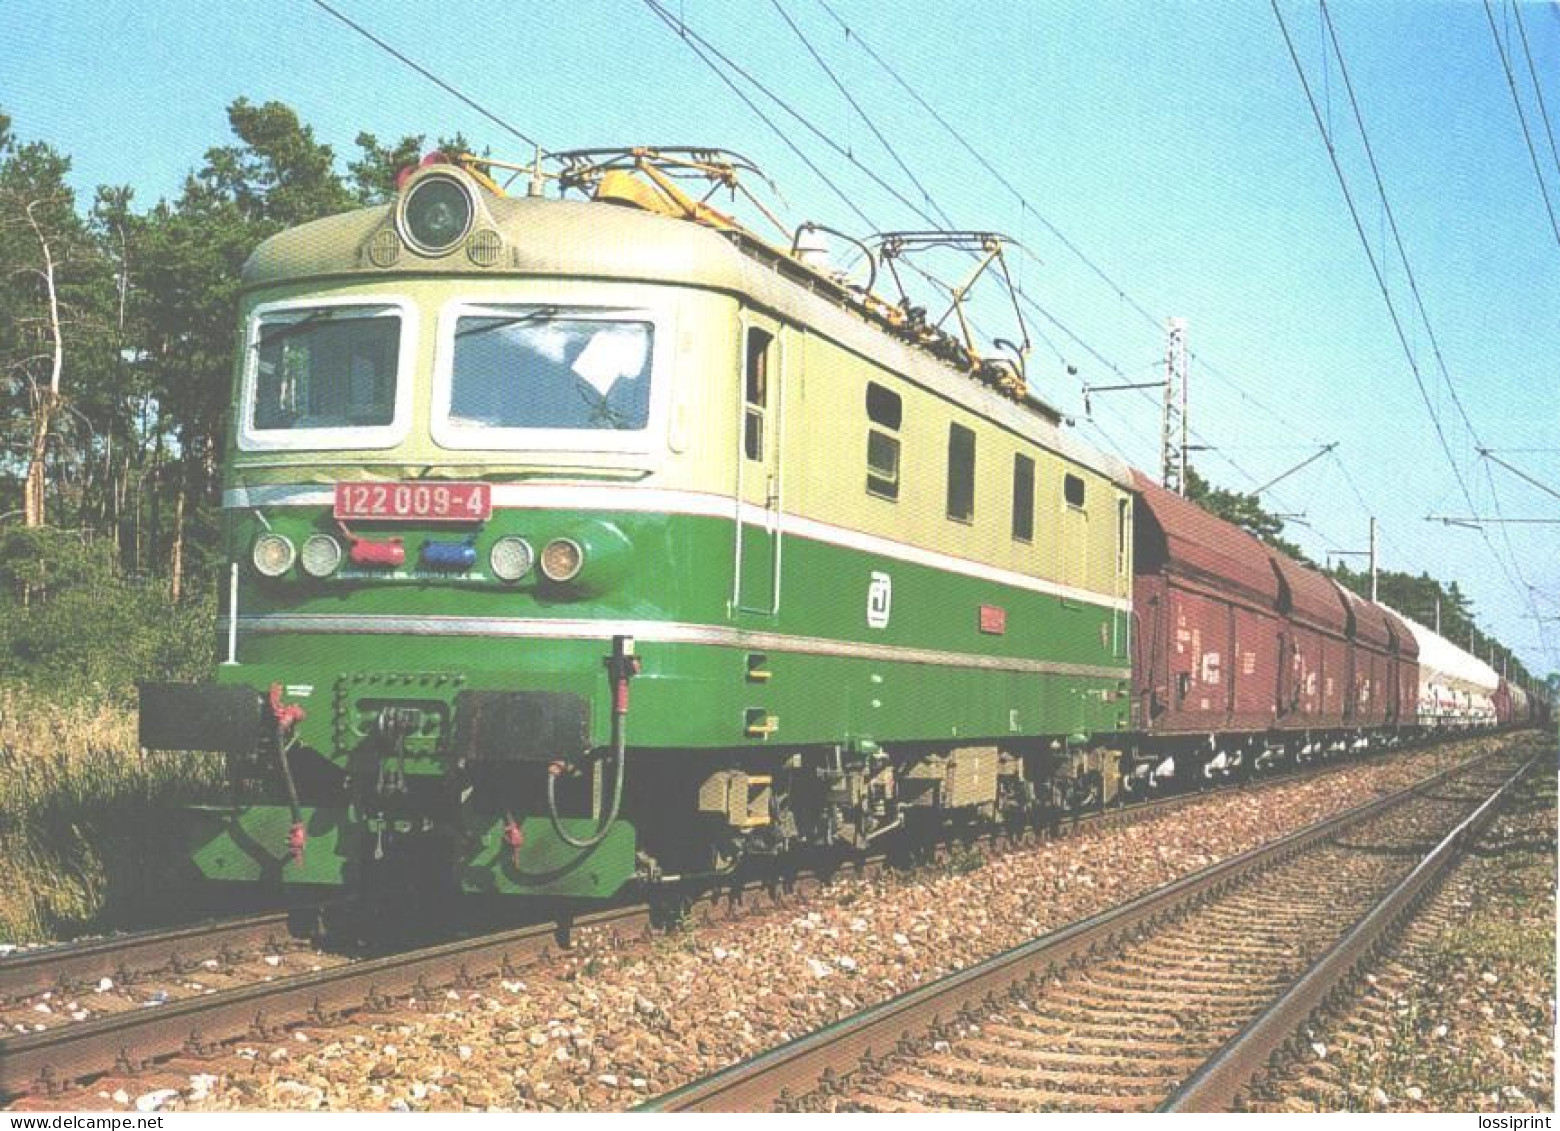 Train, Railway, Locomotive 122 009-4 - Trains